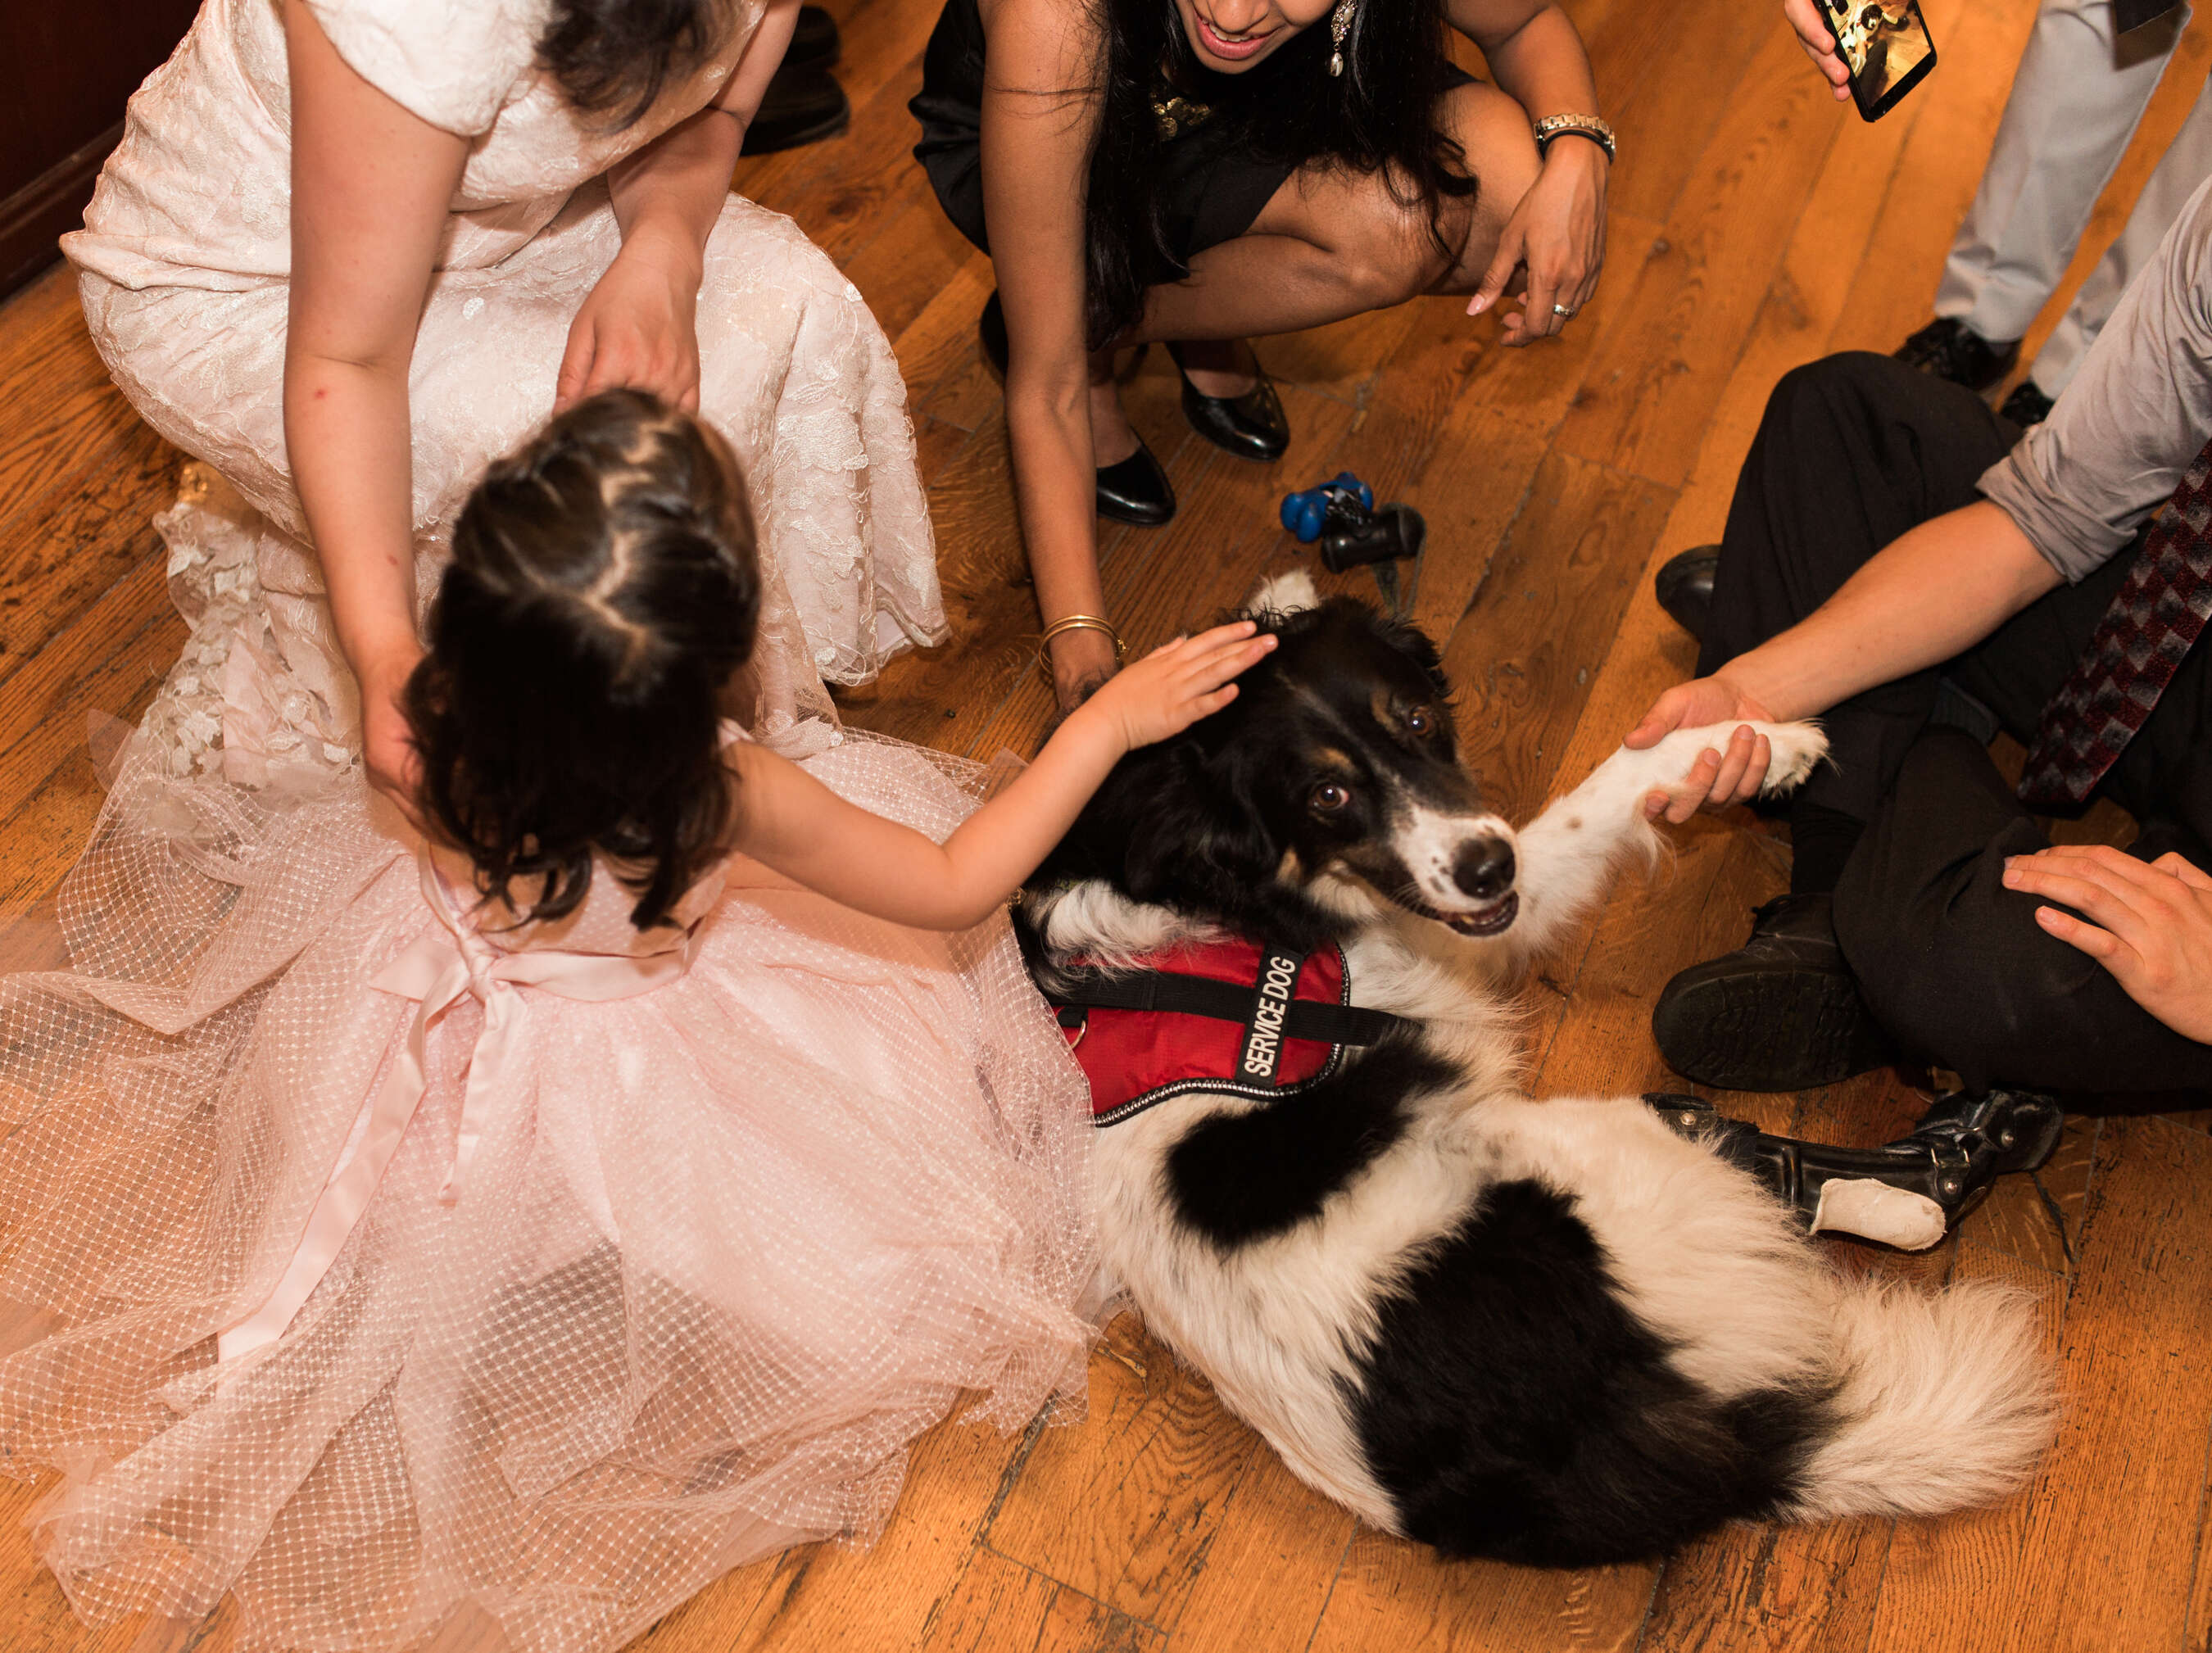 Dog at wedding reception